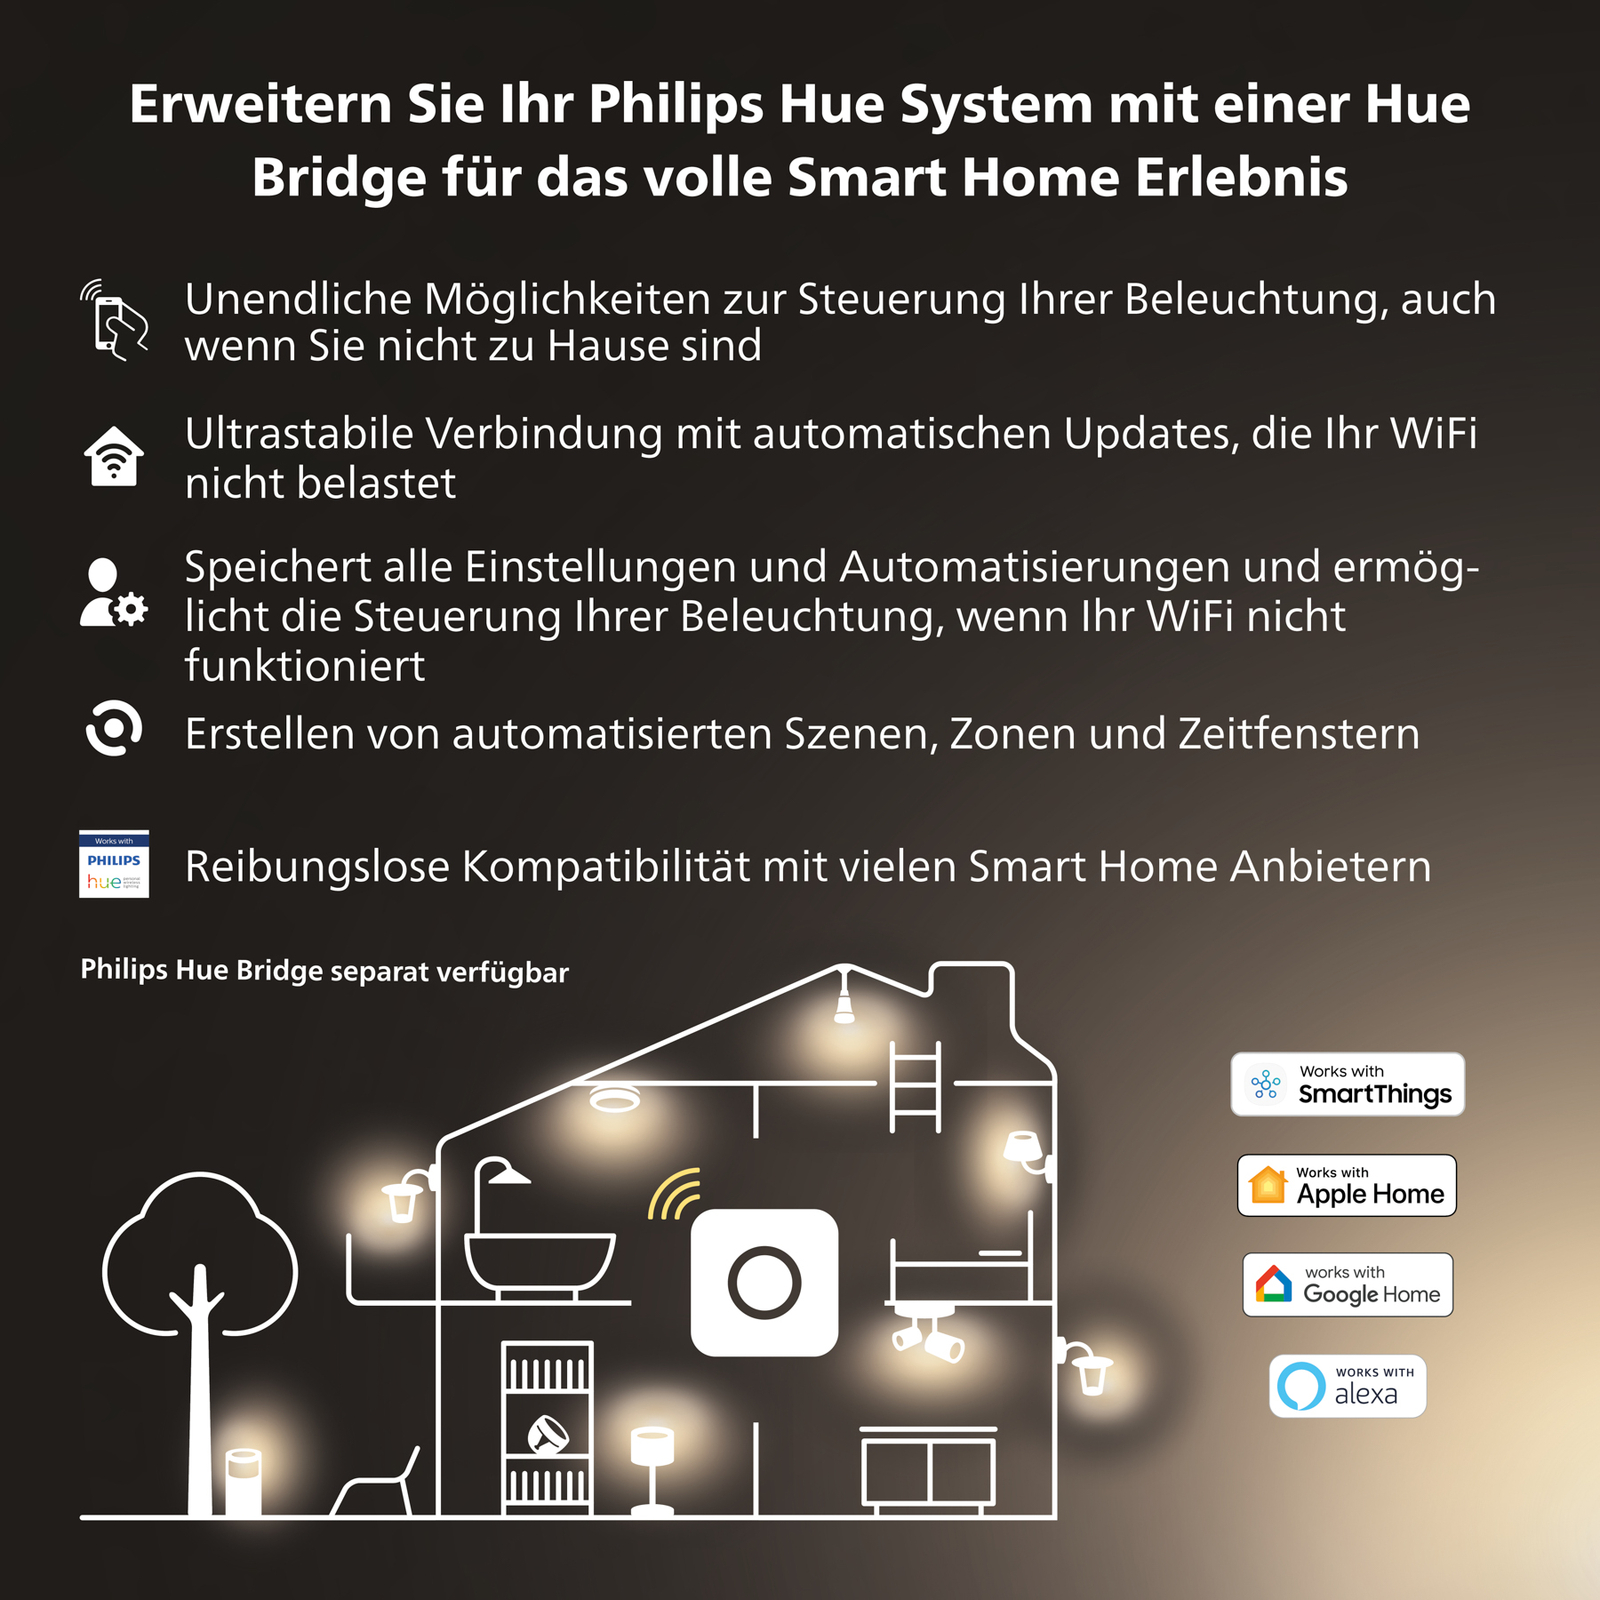 Philips Hue White Ambiance E27 LED-lampa 8W 1100lm